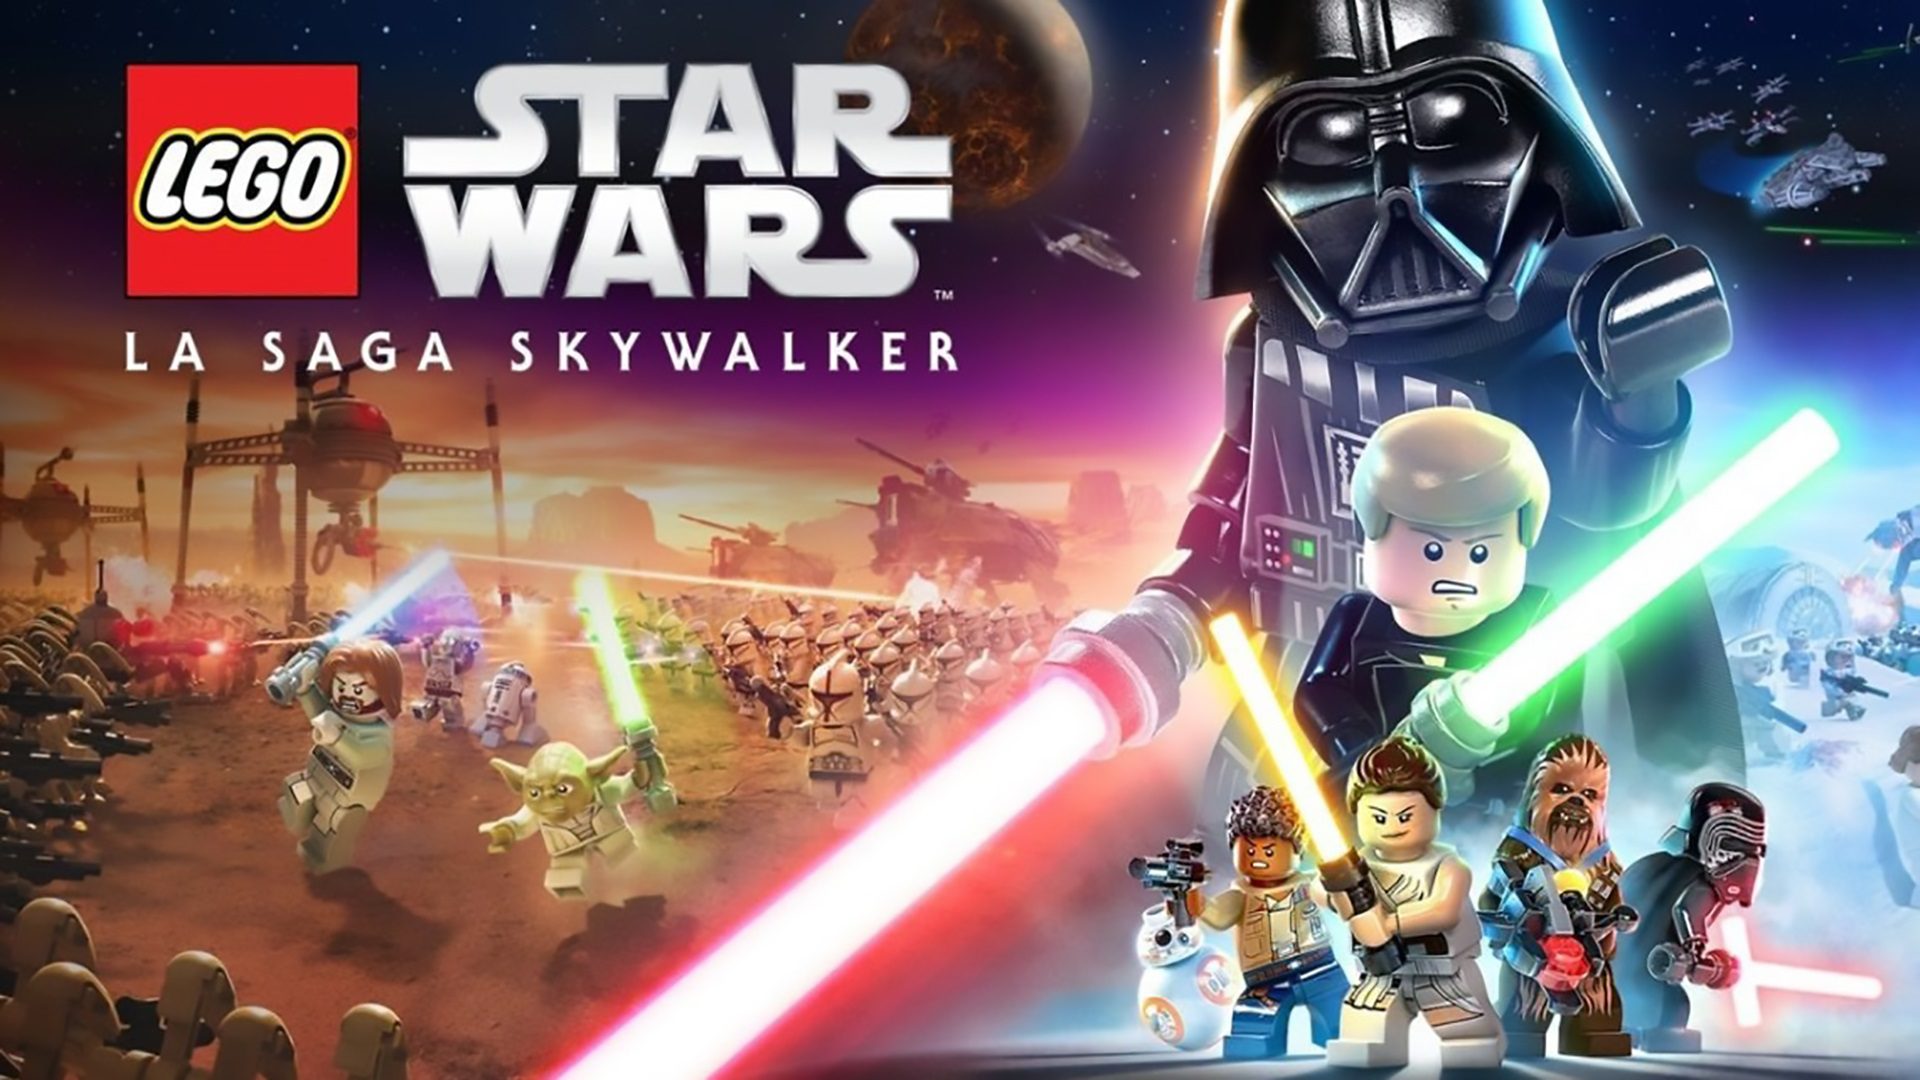 Lego Star Wars: The Skywalker Saga sets a new record